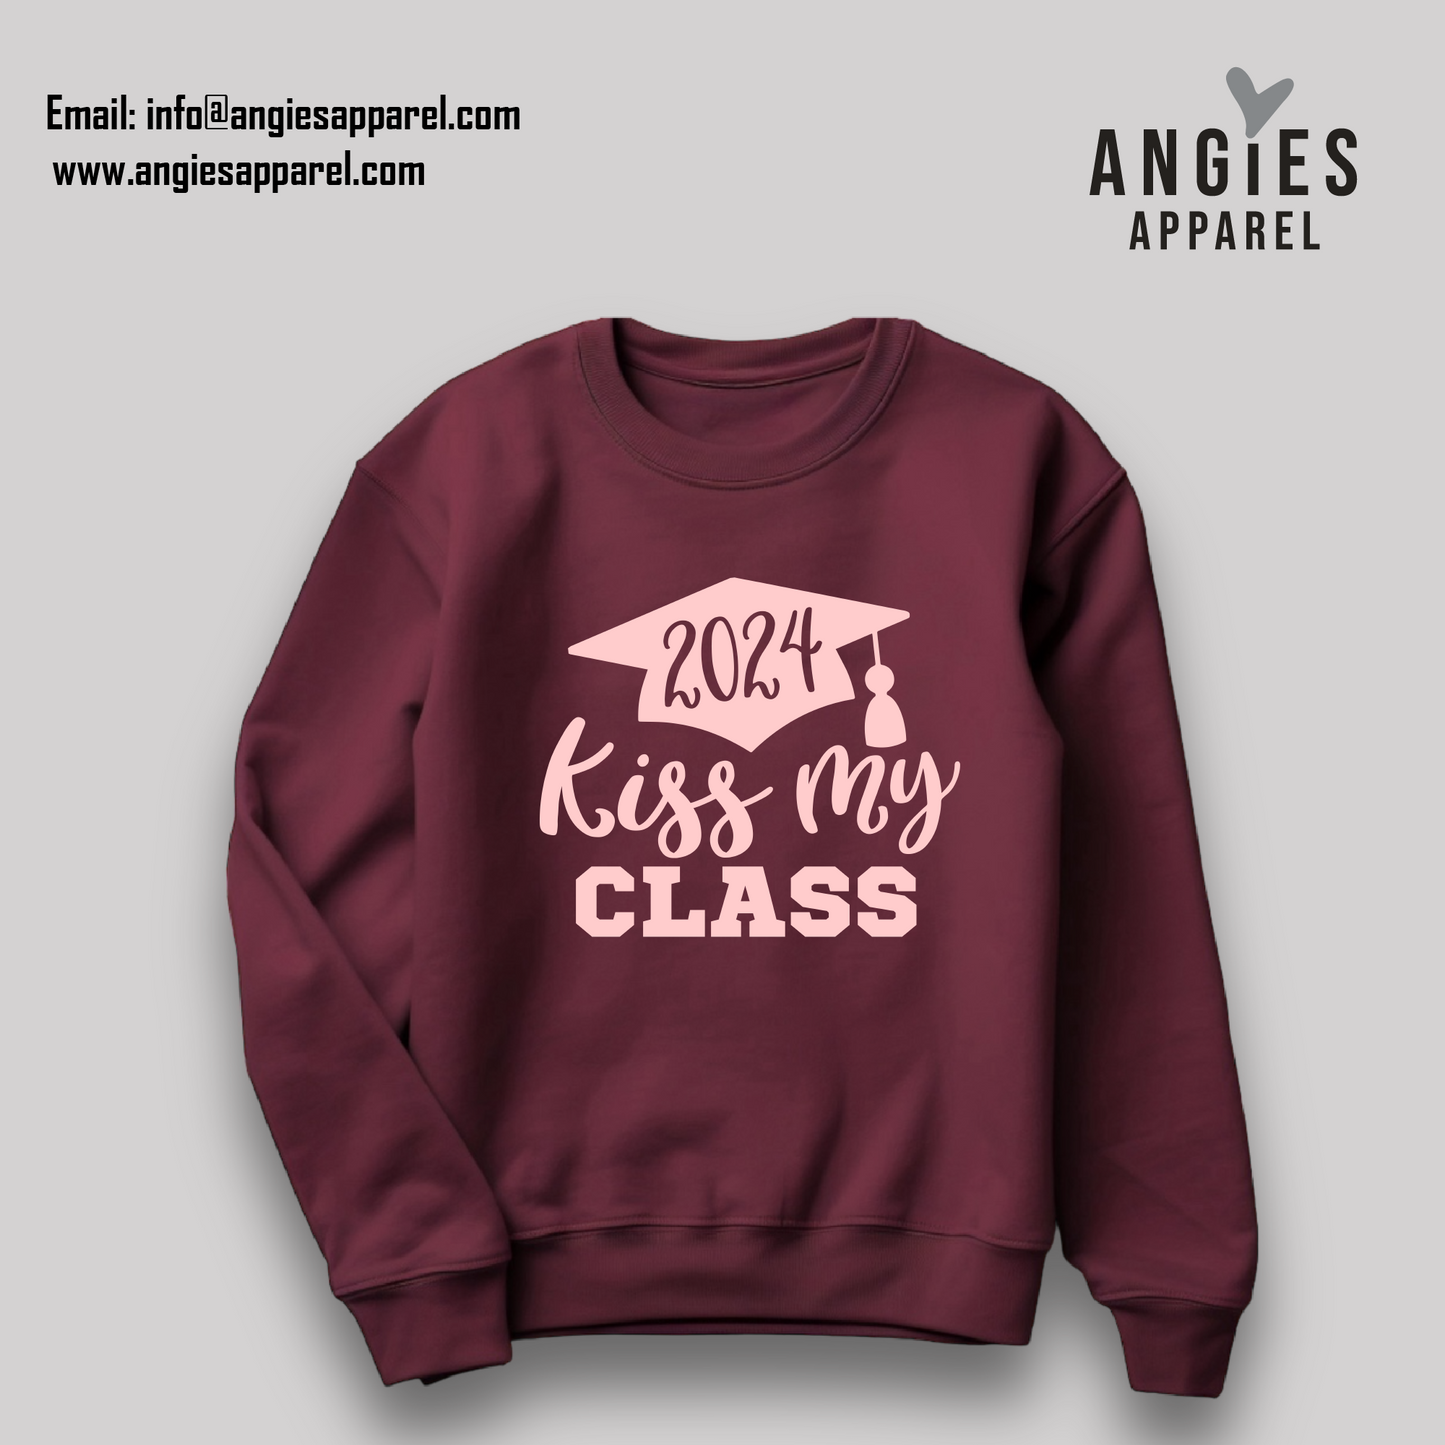 4. 2024 Kiss My Class